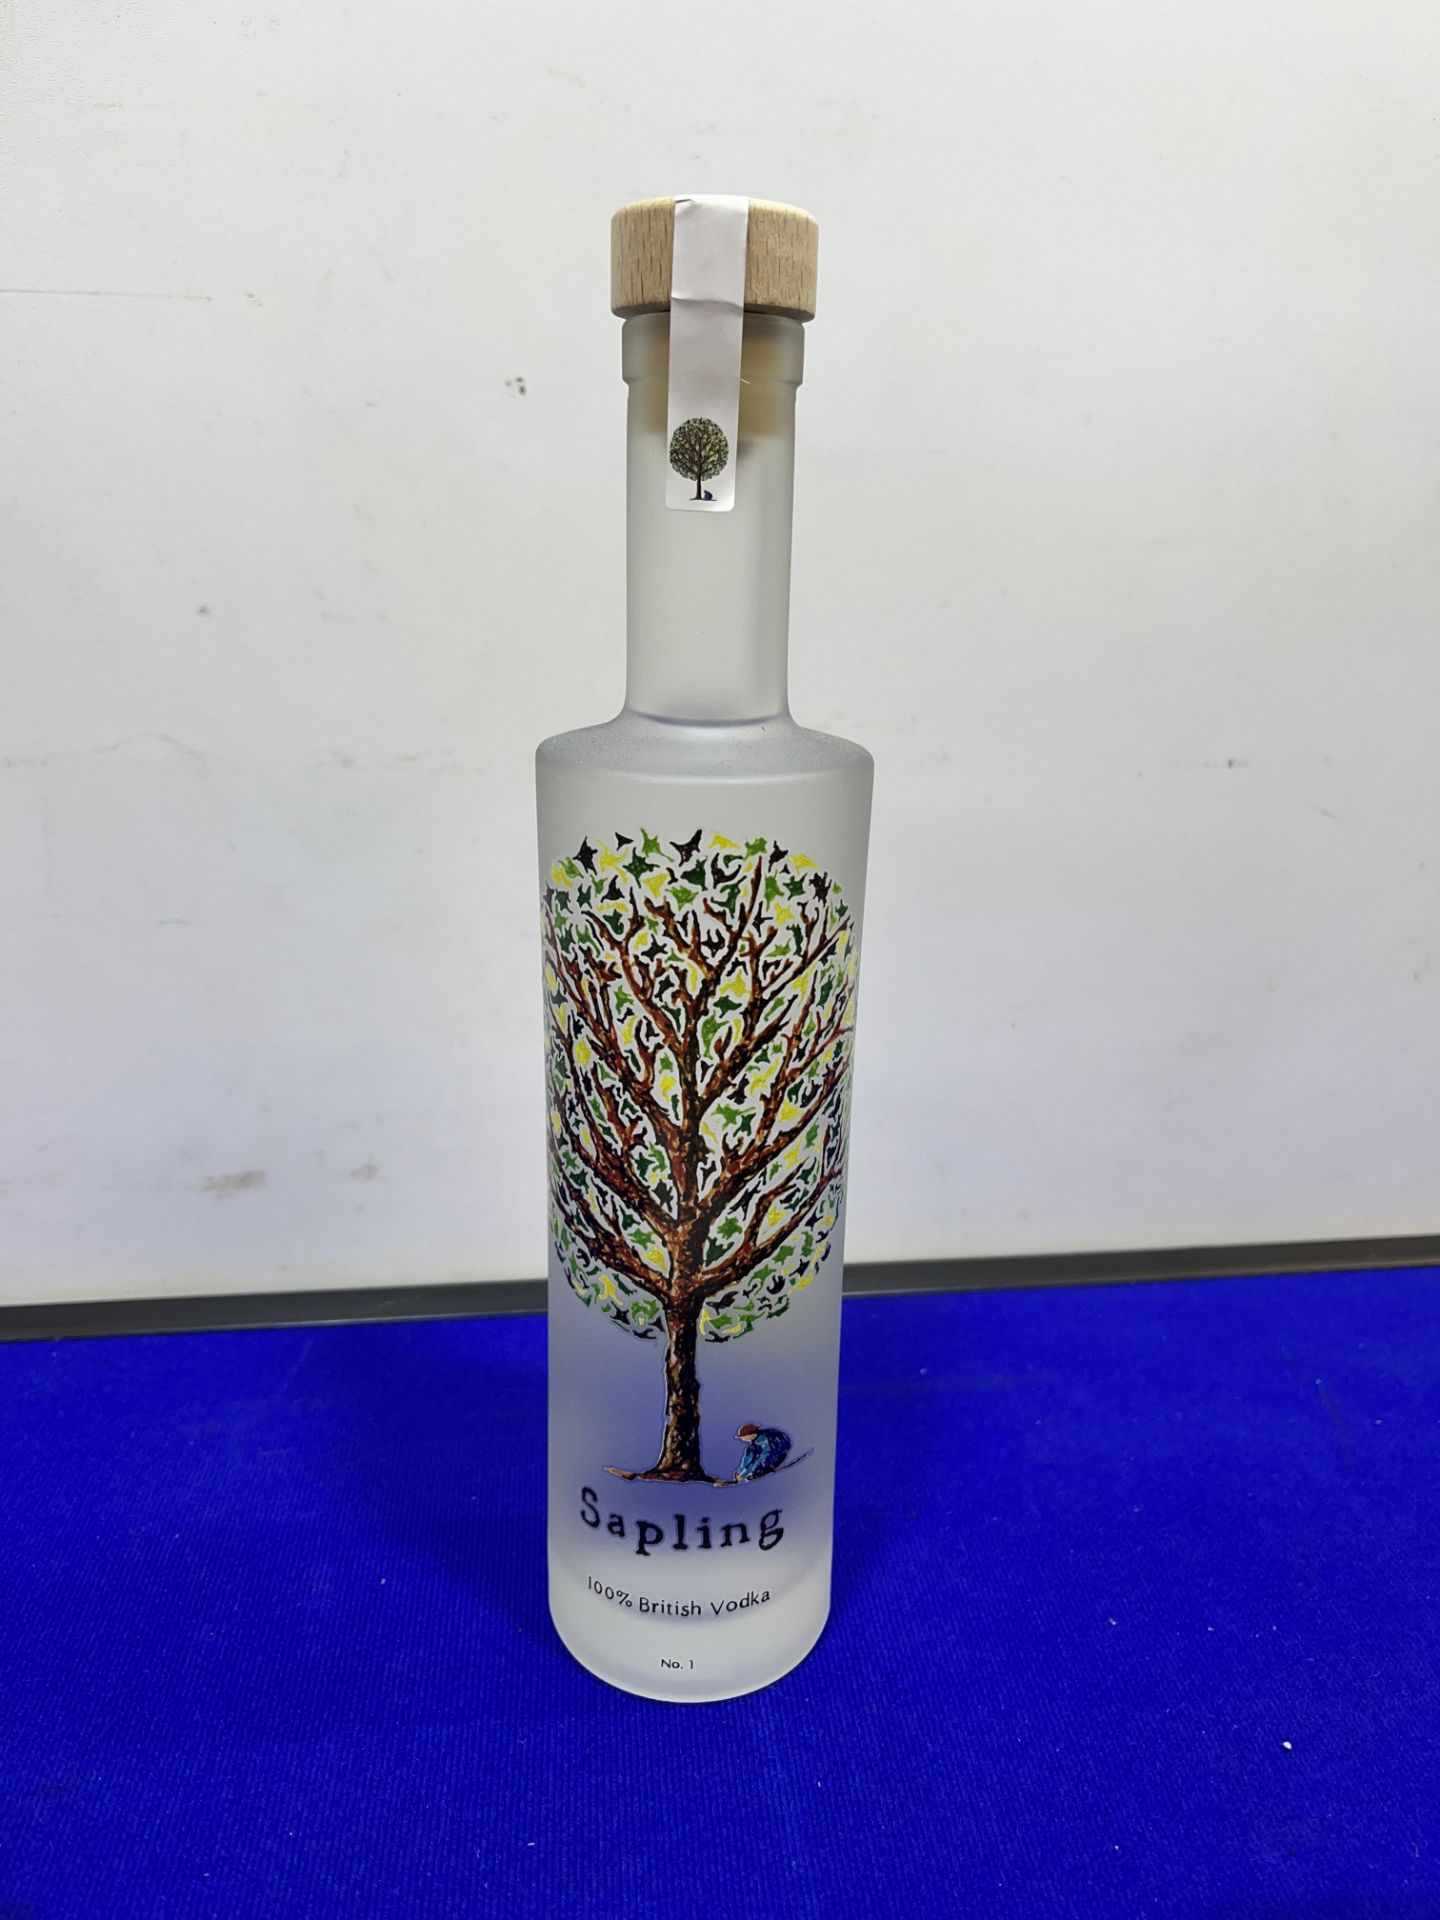 22 x Bottles of Sapling Spirits 100% British Vodka